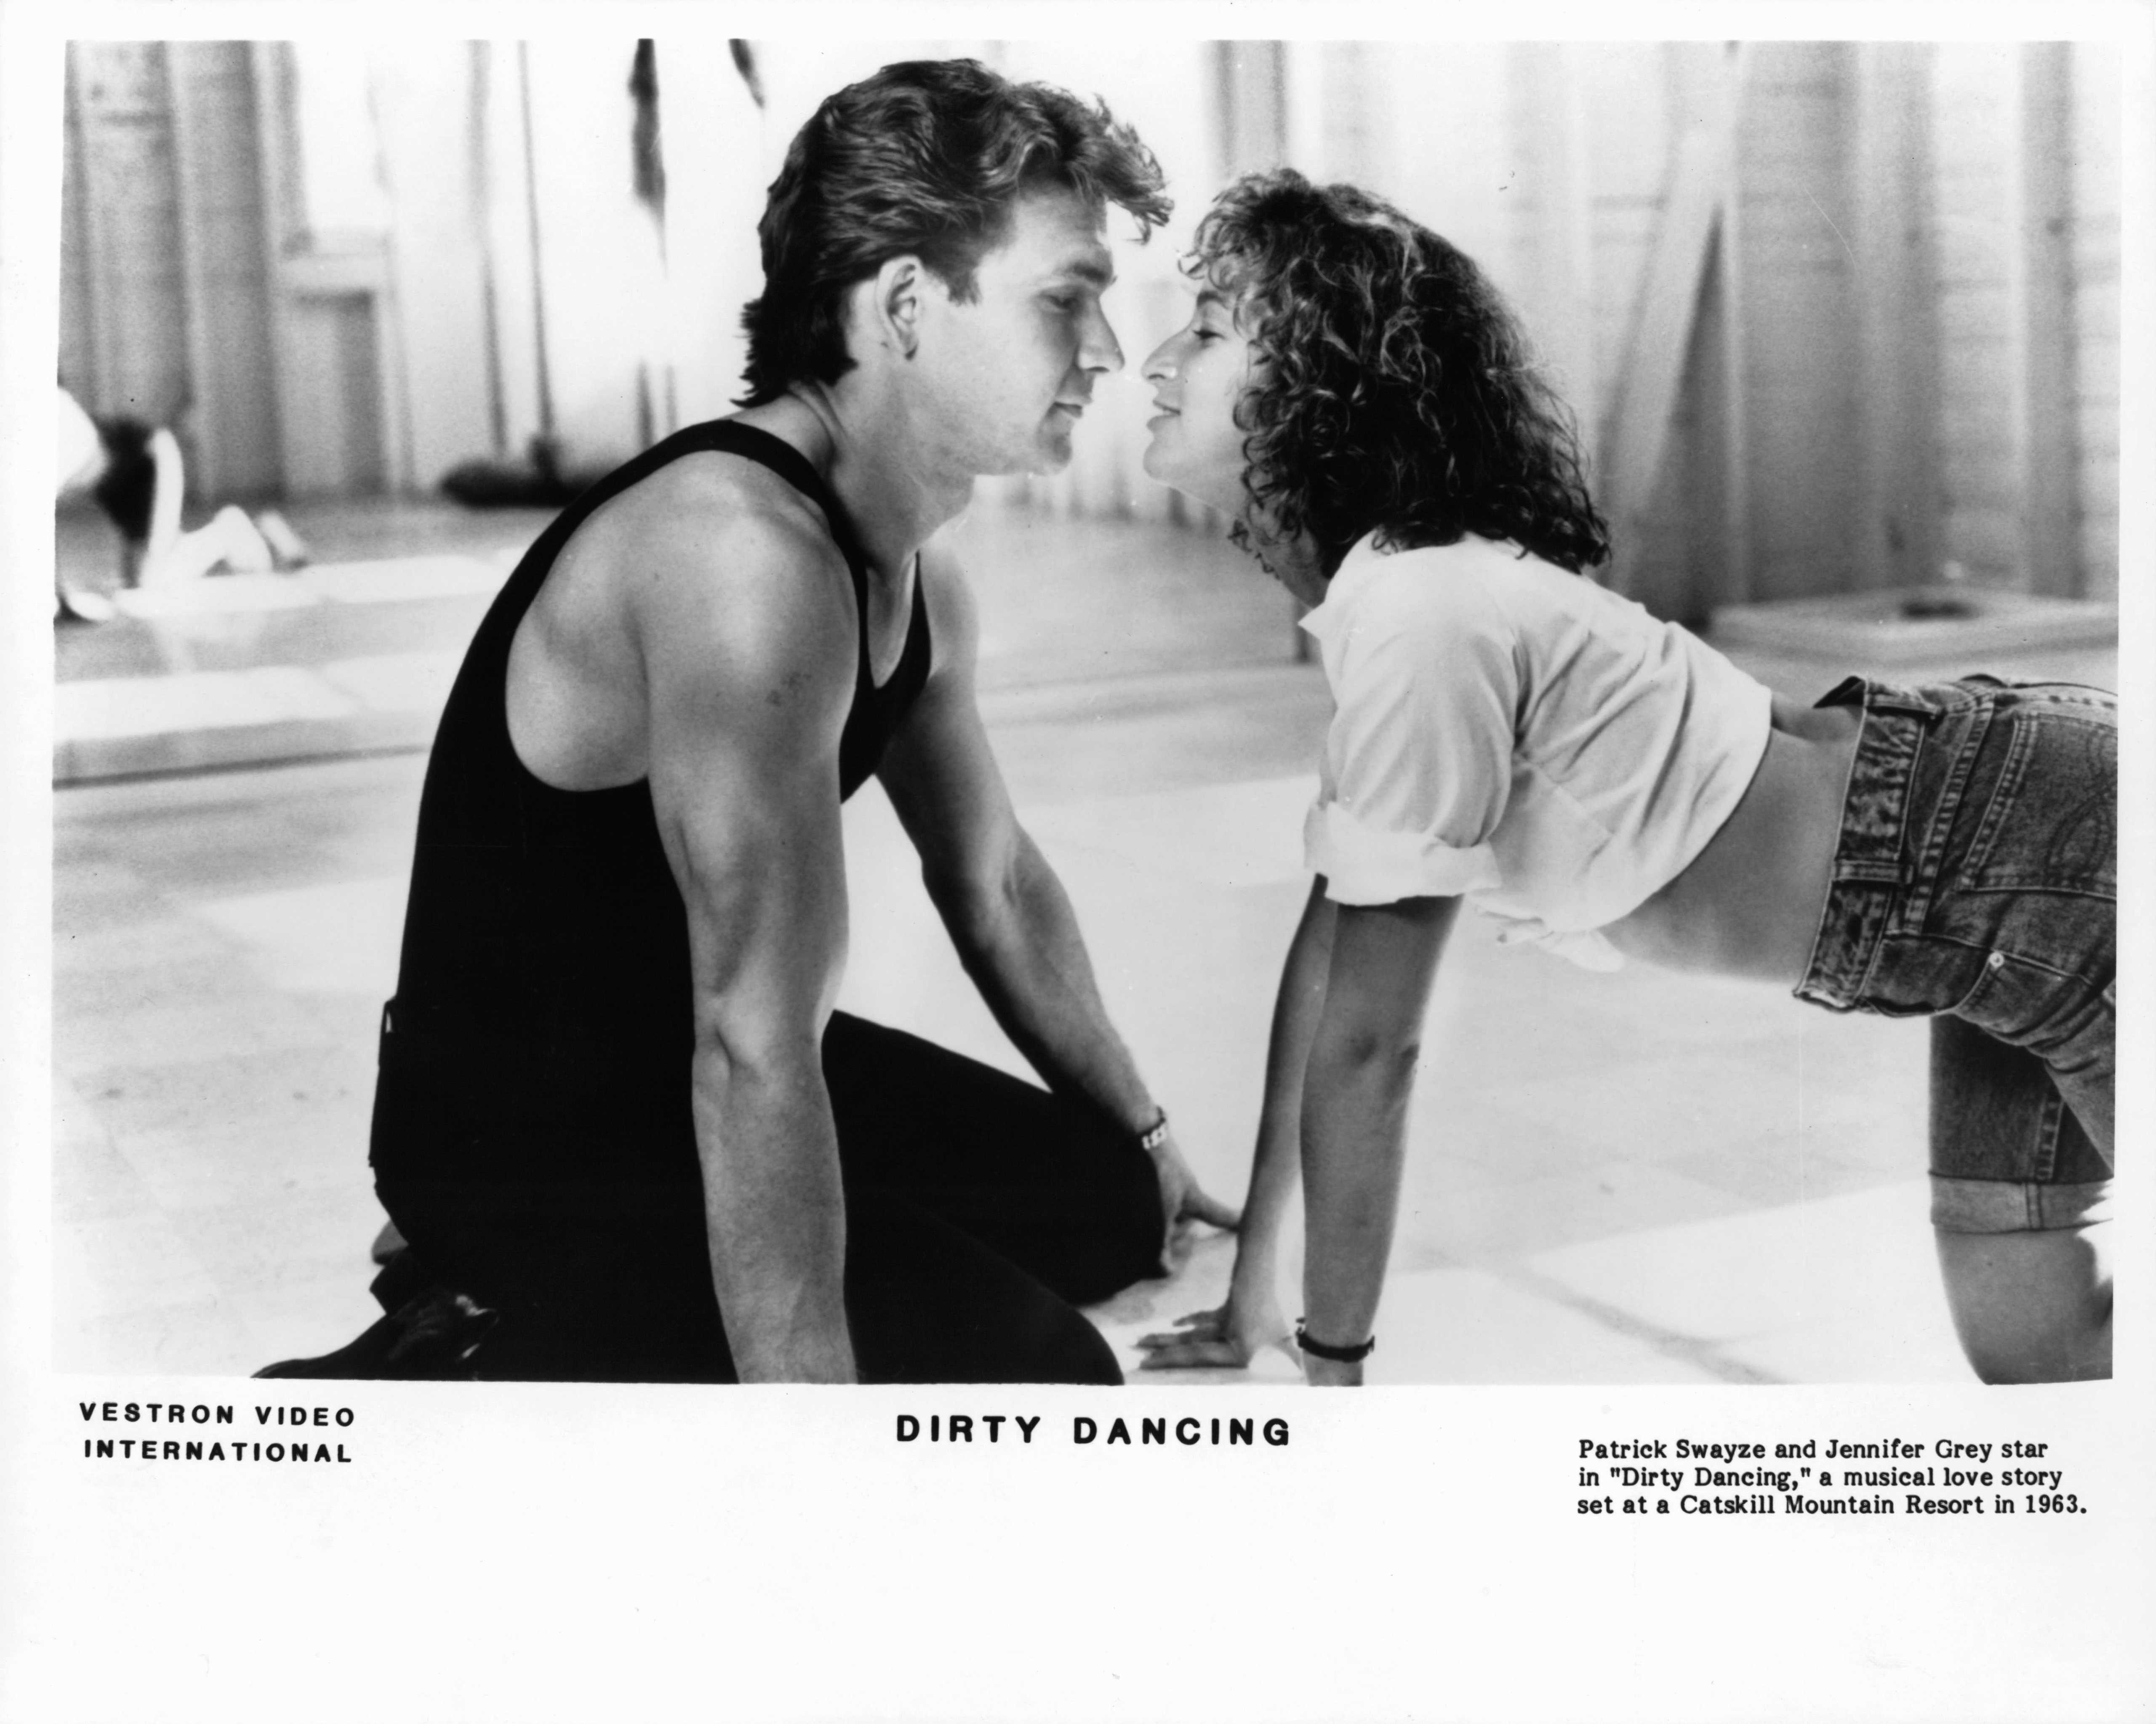 Patrick Swayze et Jennifer Grey dans "Dirty Dancing", vers 1987. | Source : Getty Images